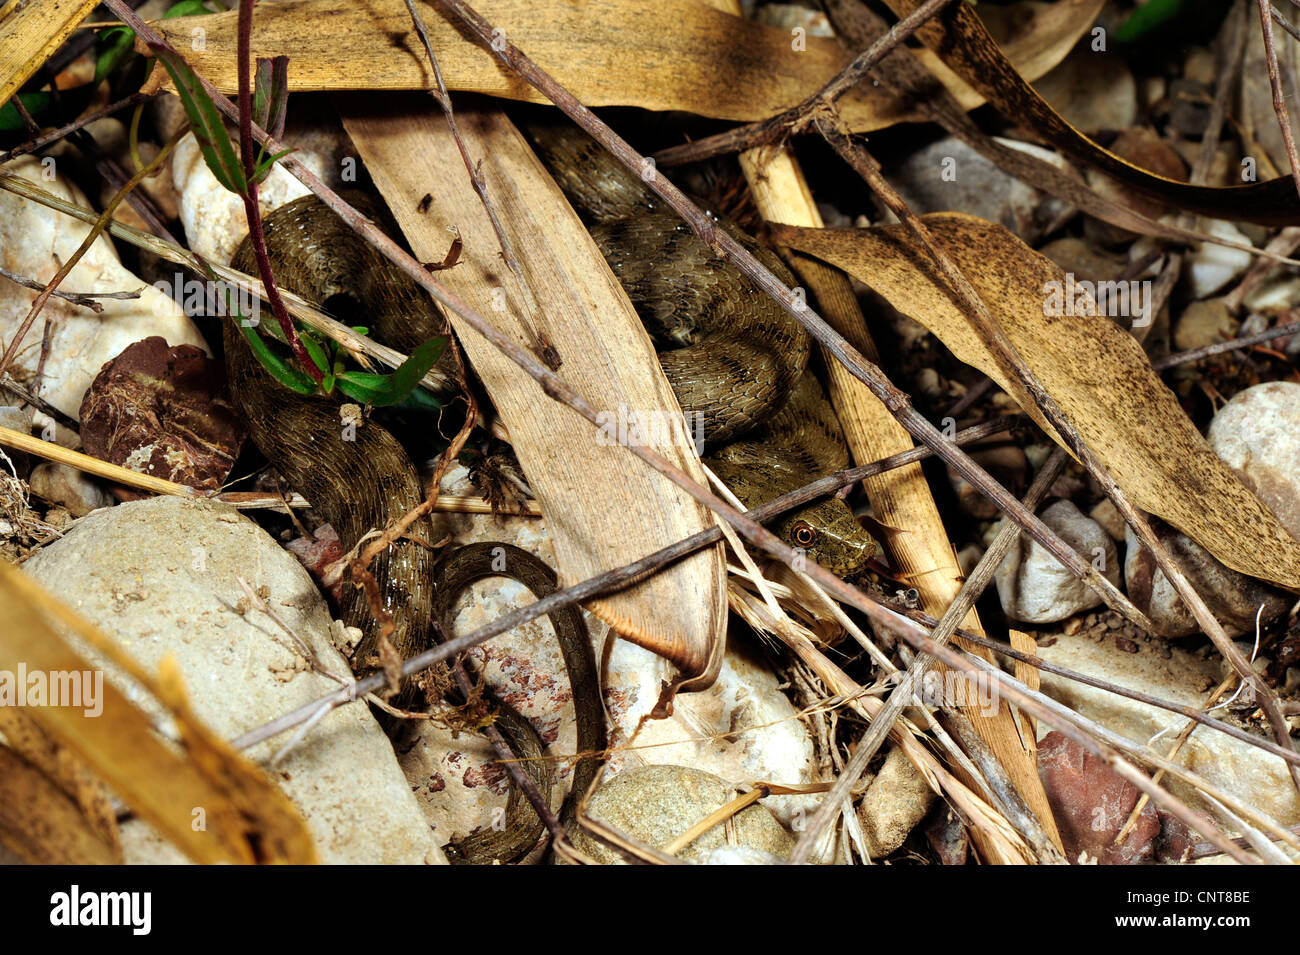 dice snake (Natrix tessellata), at his hiding place, Greece, Peloponnes, Kaiafa See Stock Photo